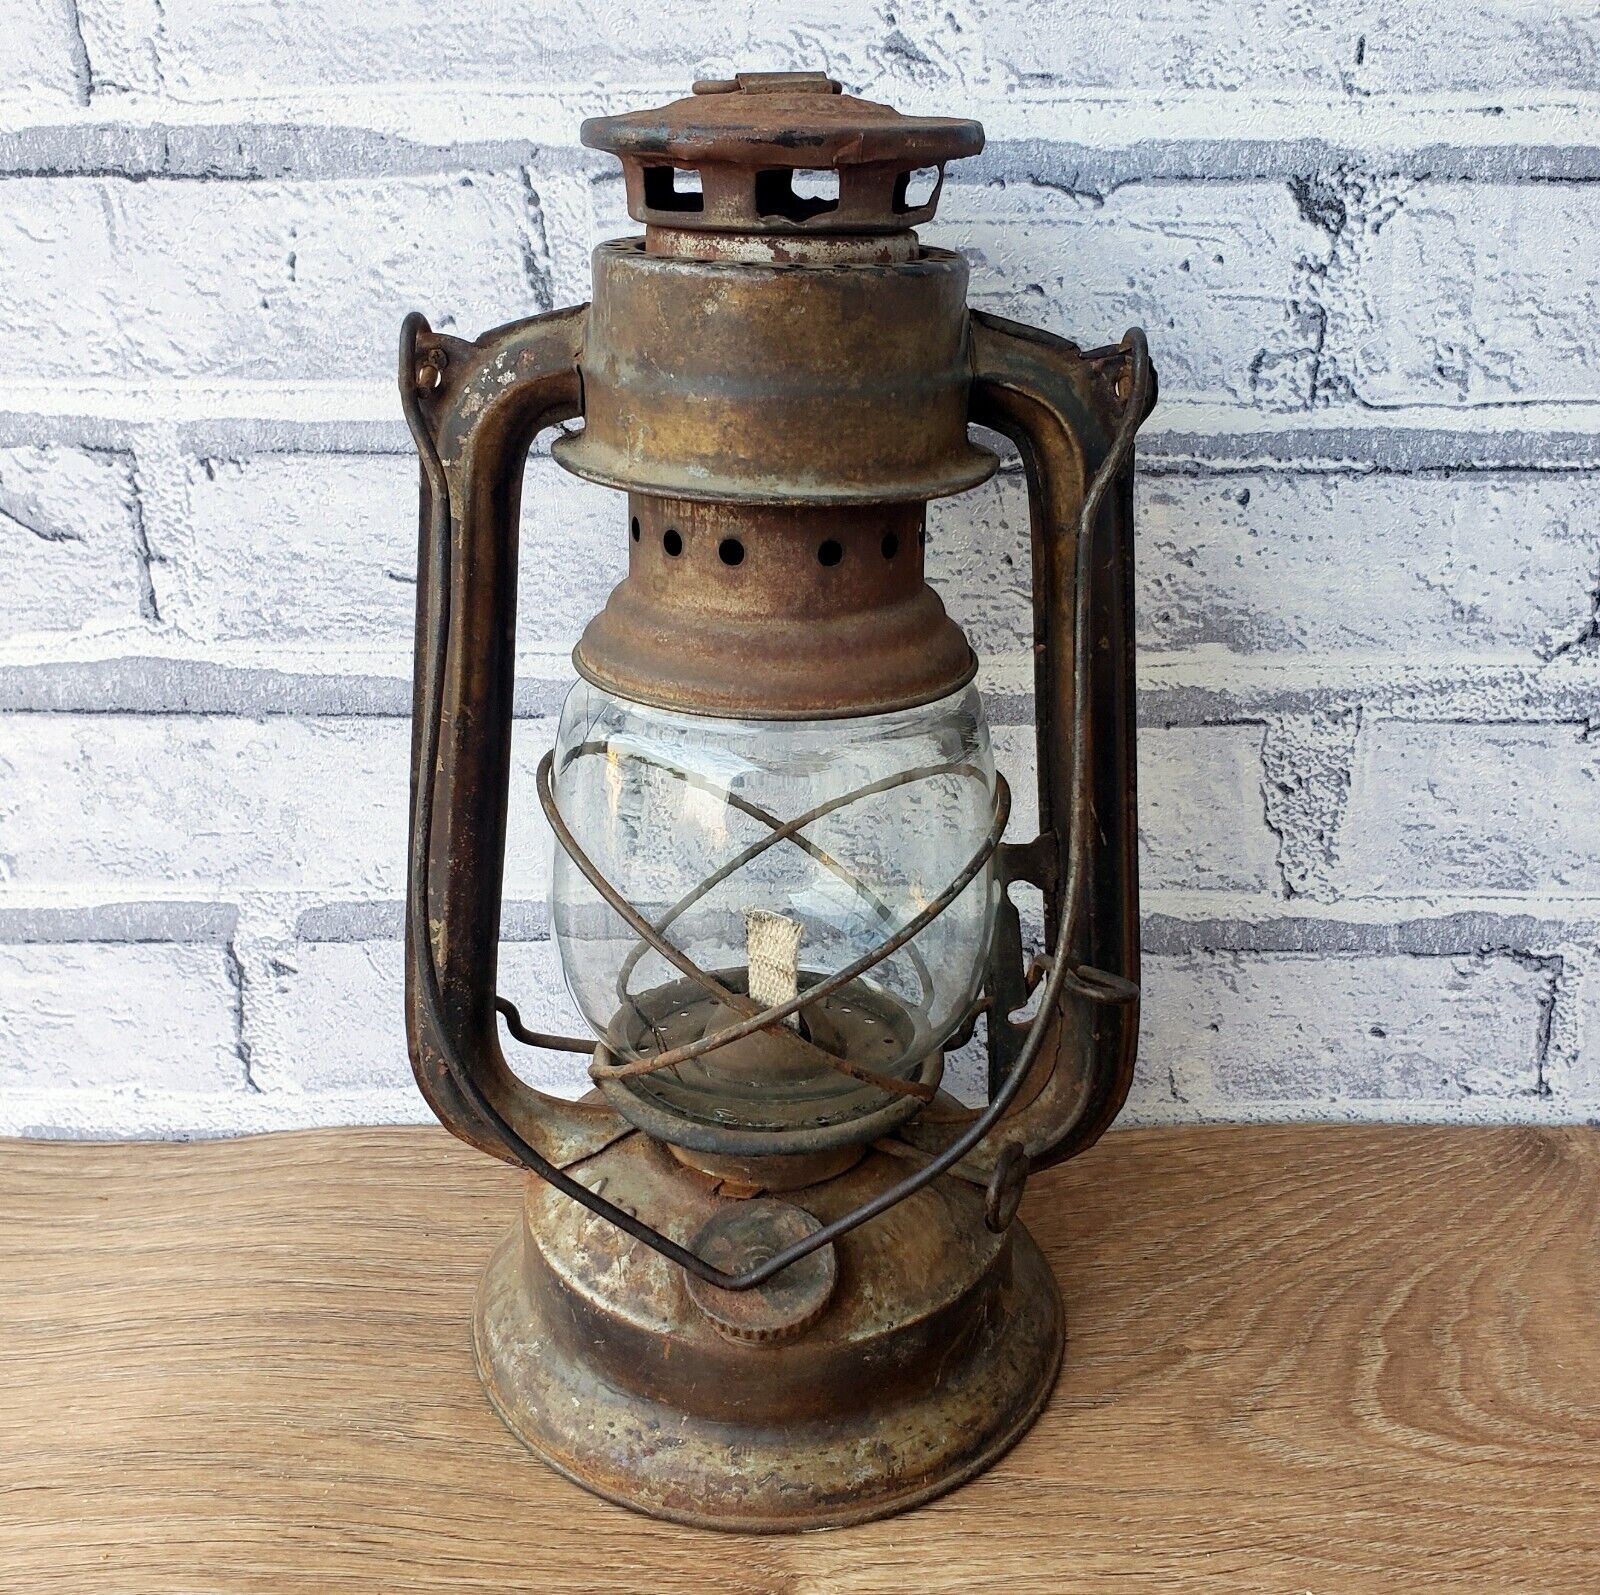 Original Hurricane SUN NO.1 Lamp Antique Collectible Kerosene Vintage Lantern.